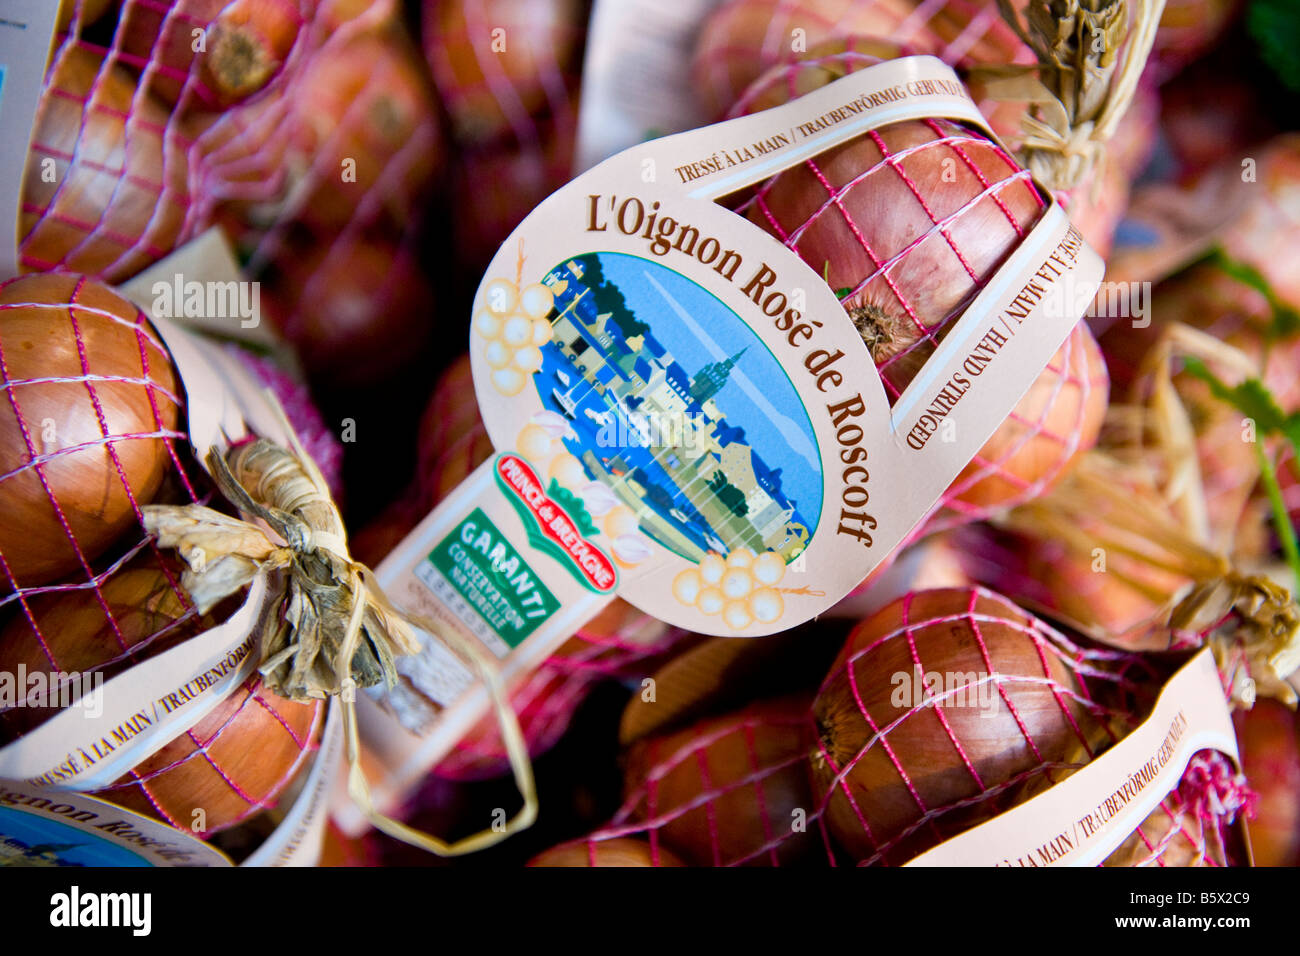 Borough Farmers Market , bags of L'Oignon Rose de Roscoff , Prince de Bretagne , beautiful sweet pink onions from Brittany Stock Photo